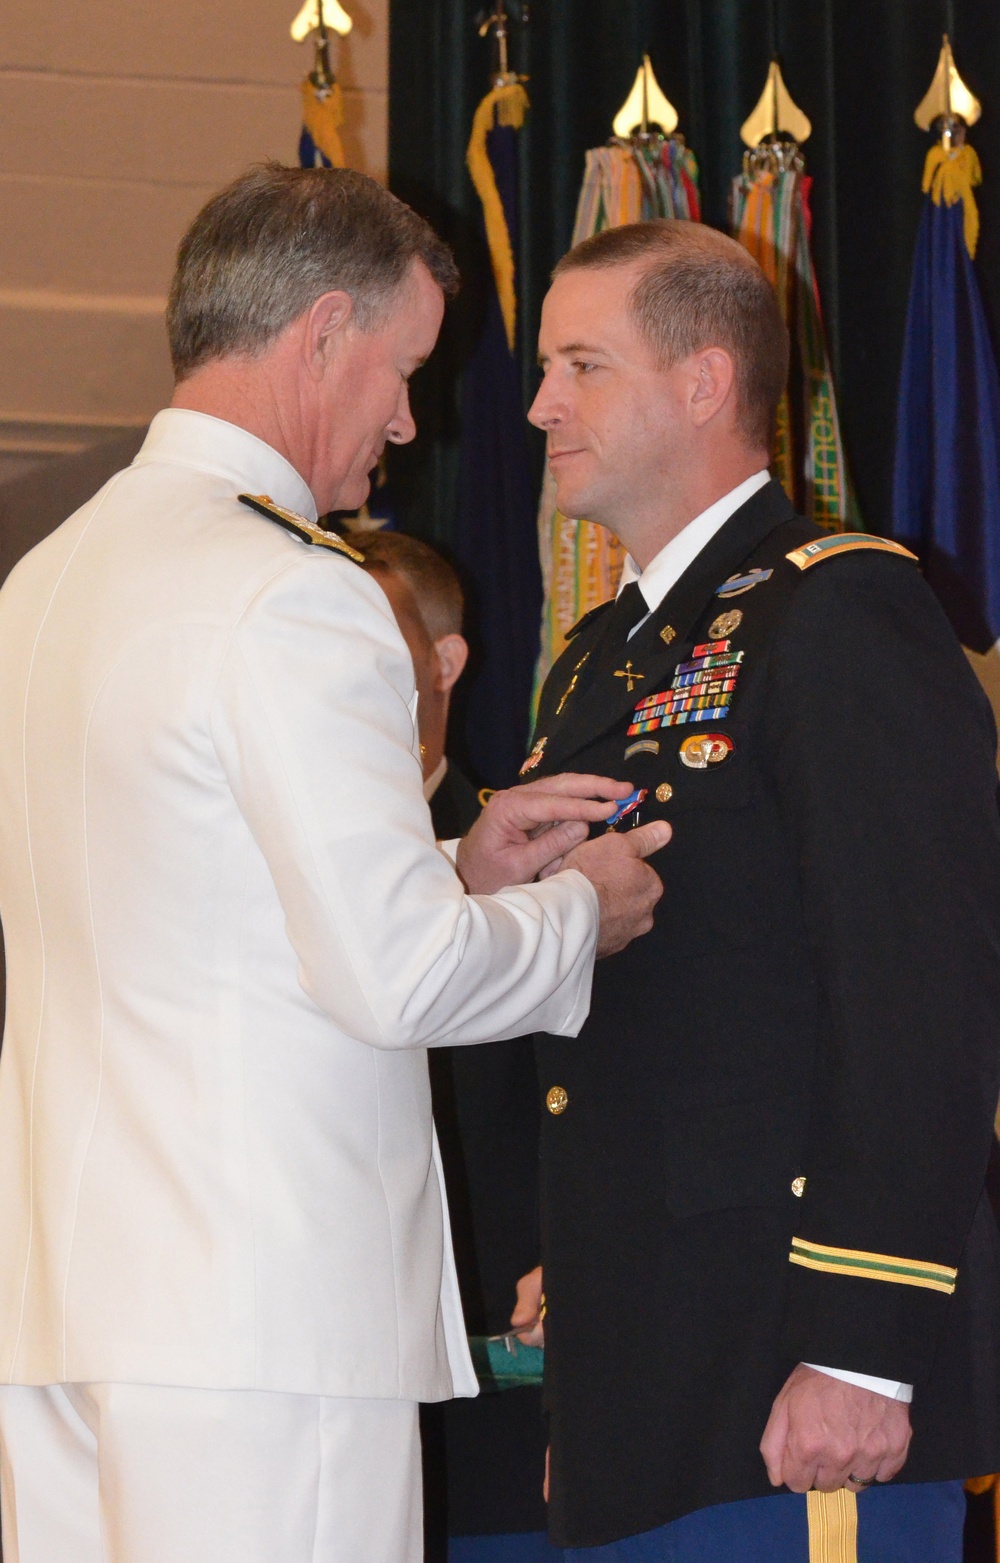 Green Berets awarded Distinguished Service Cross for Valor